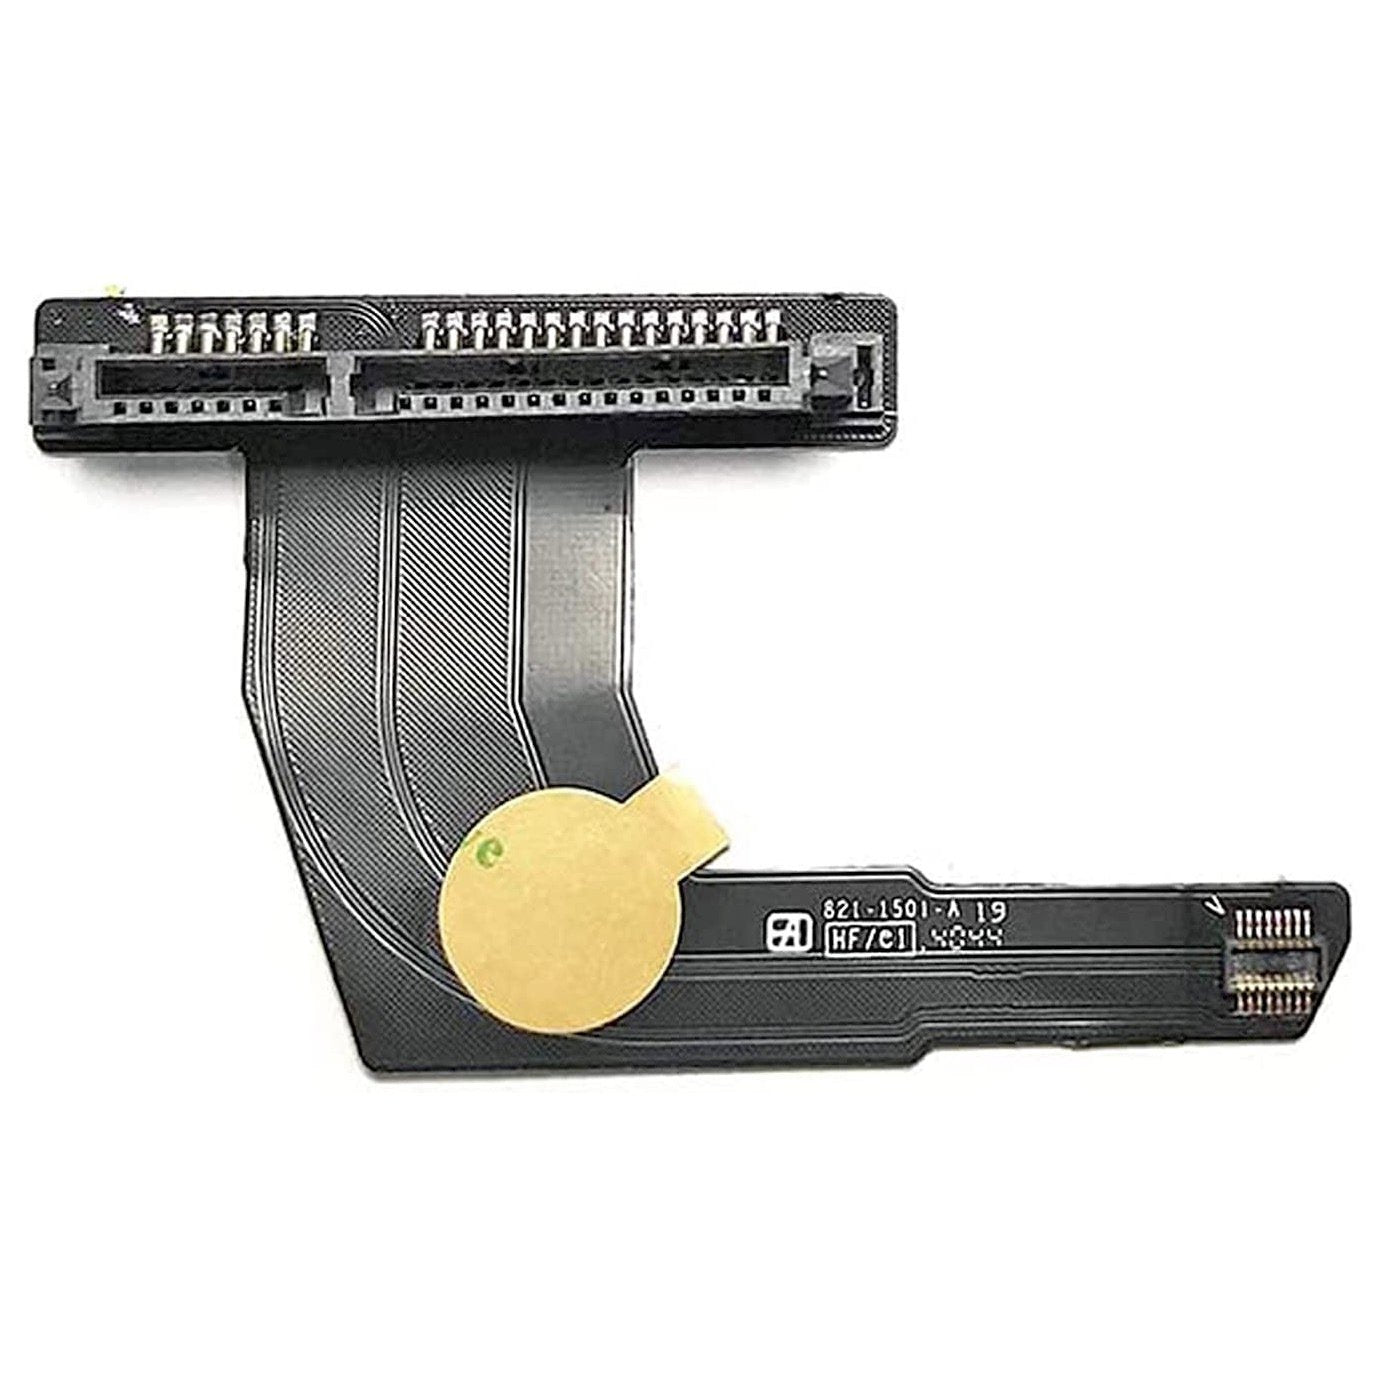 SSD Hard Drive Installation Flex Cable for Mac mini 2011 & 2012 Models - Upper Drive Bay